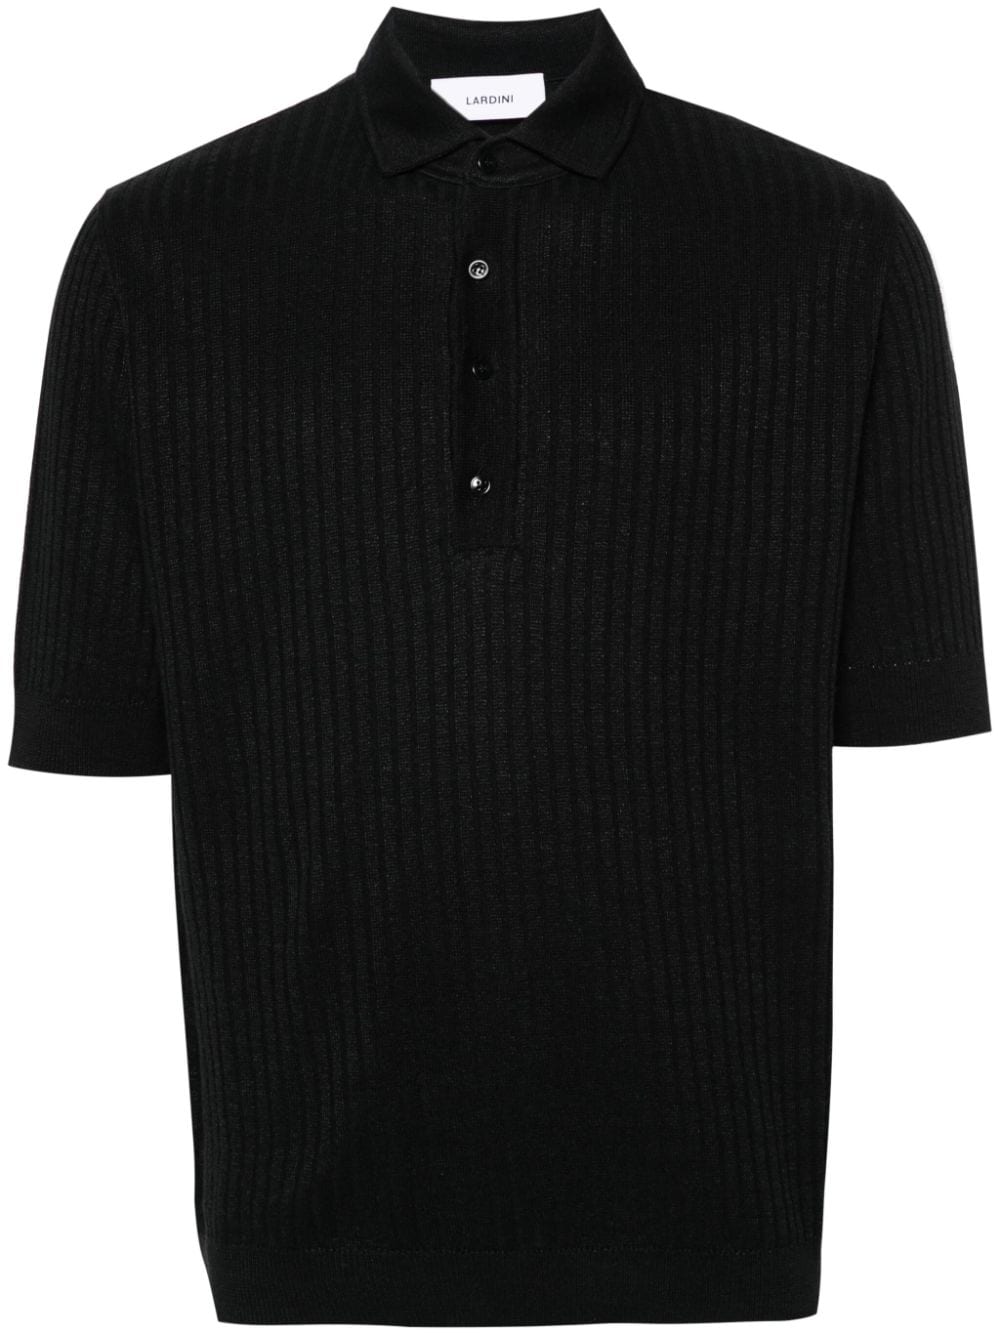 Black ribbed polo shirt